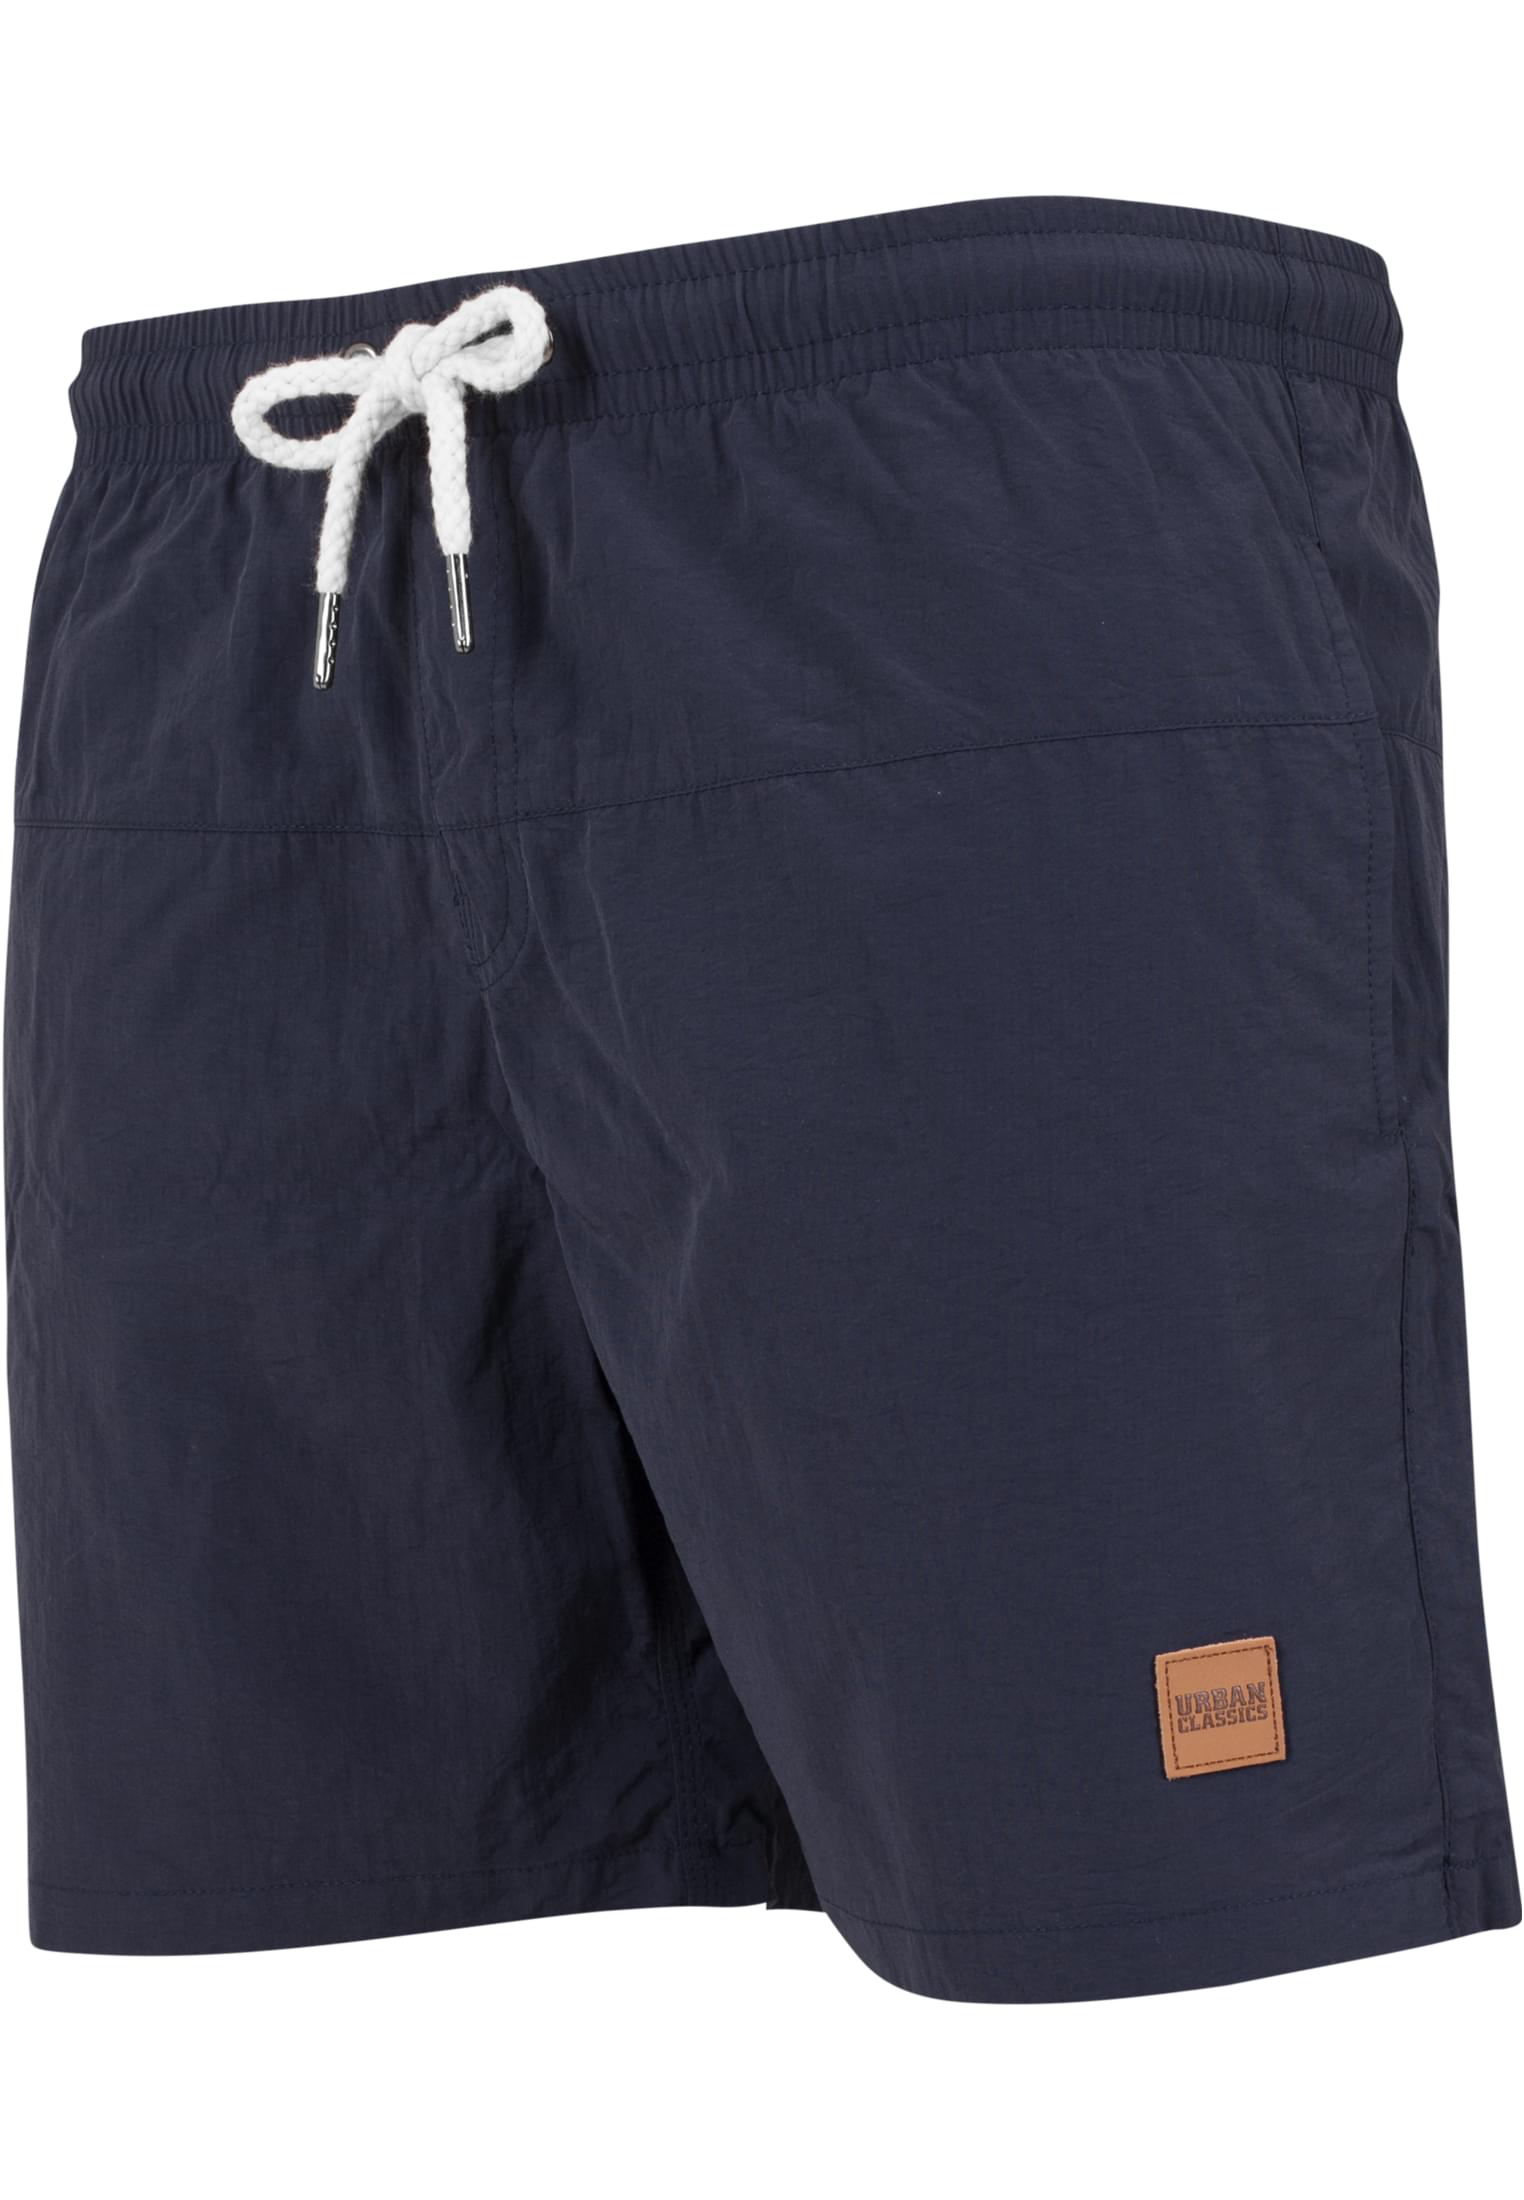 Plus Size Block Swim Shorts in Farbe navy/navy